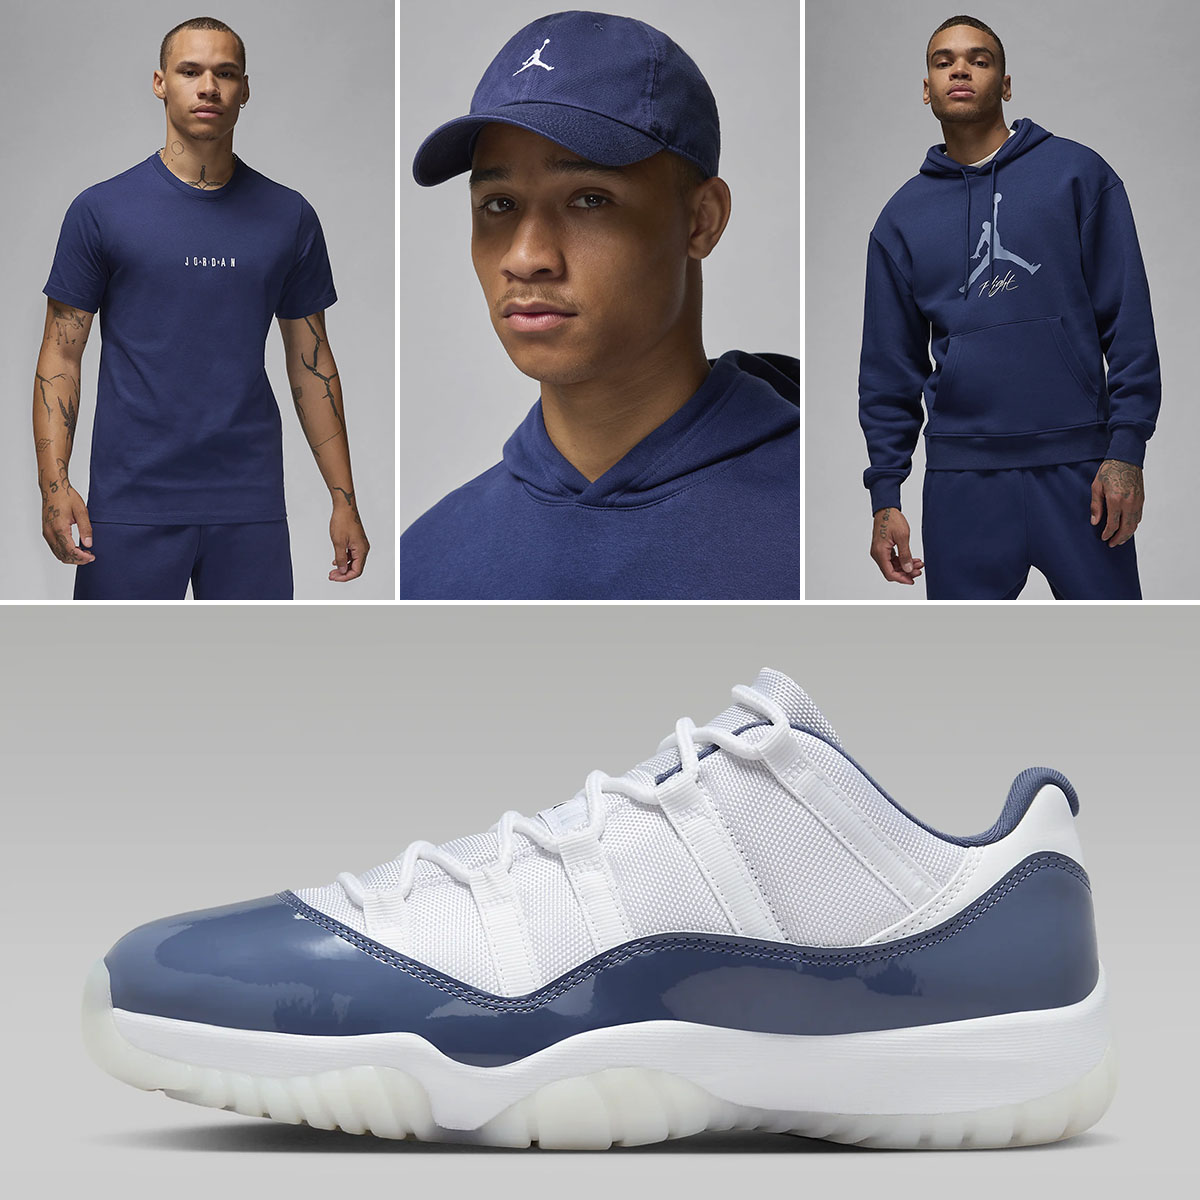 Air Jordan 11 Low Diffused Blue Outfits